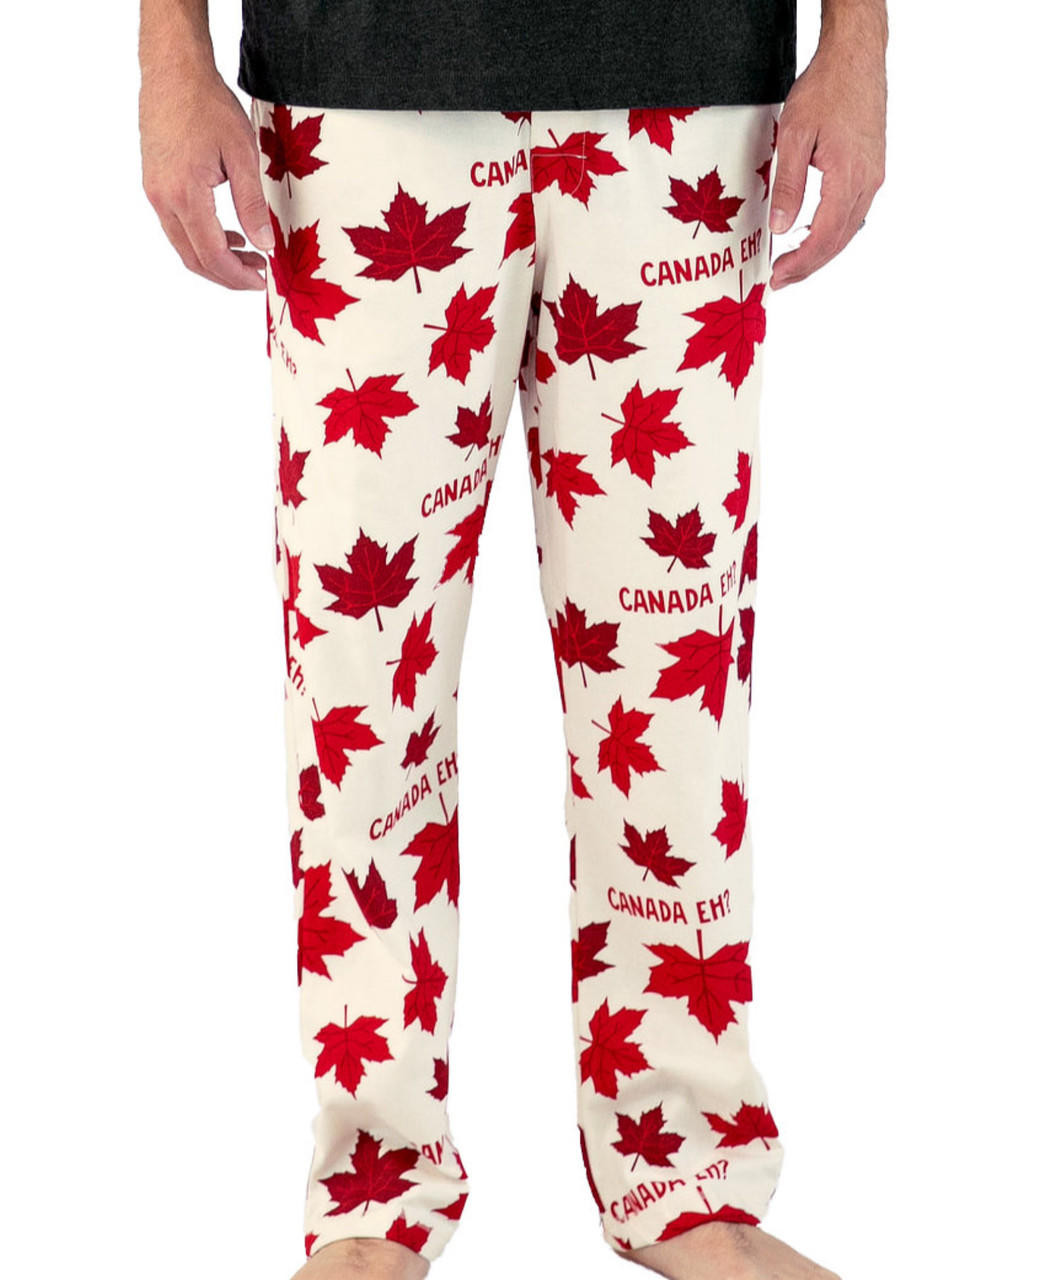 Sonoma Mens Gray Skiing Print Flannel Sleep Pants Pajama Bottoms Medium 